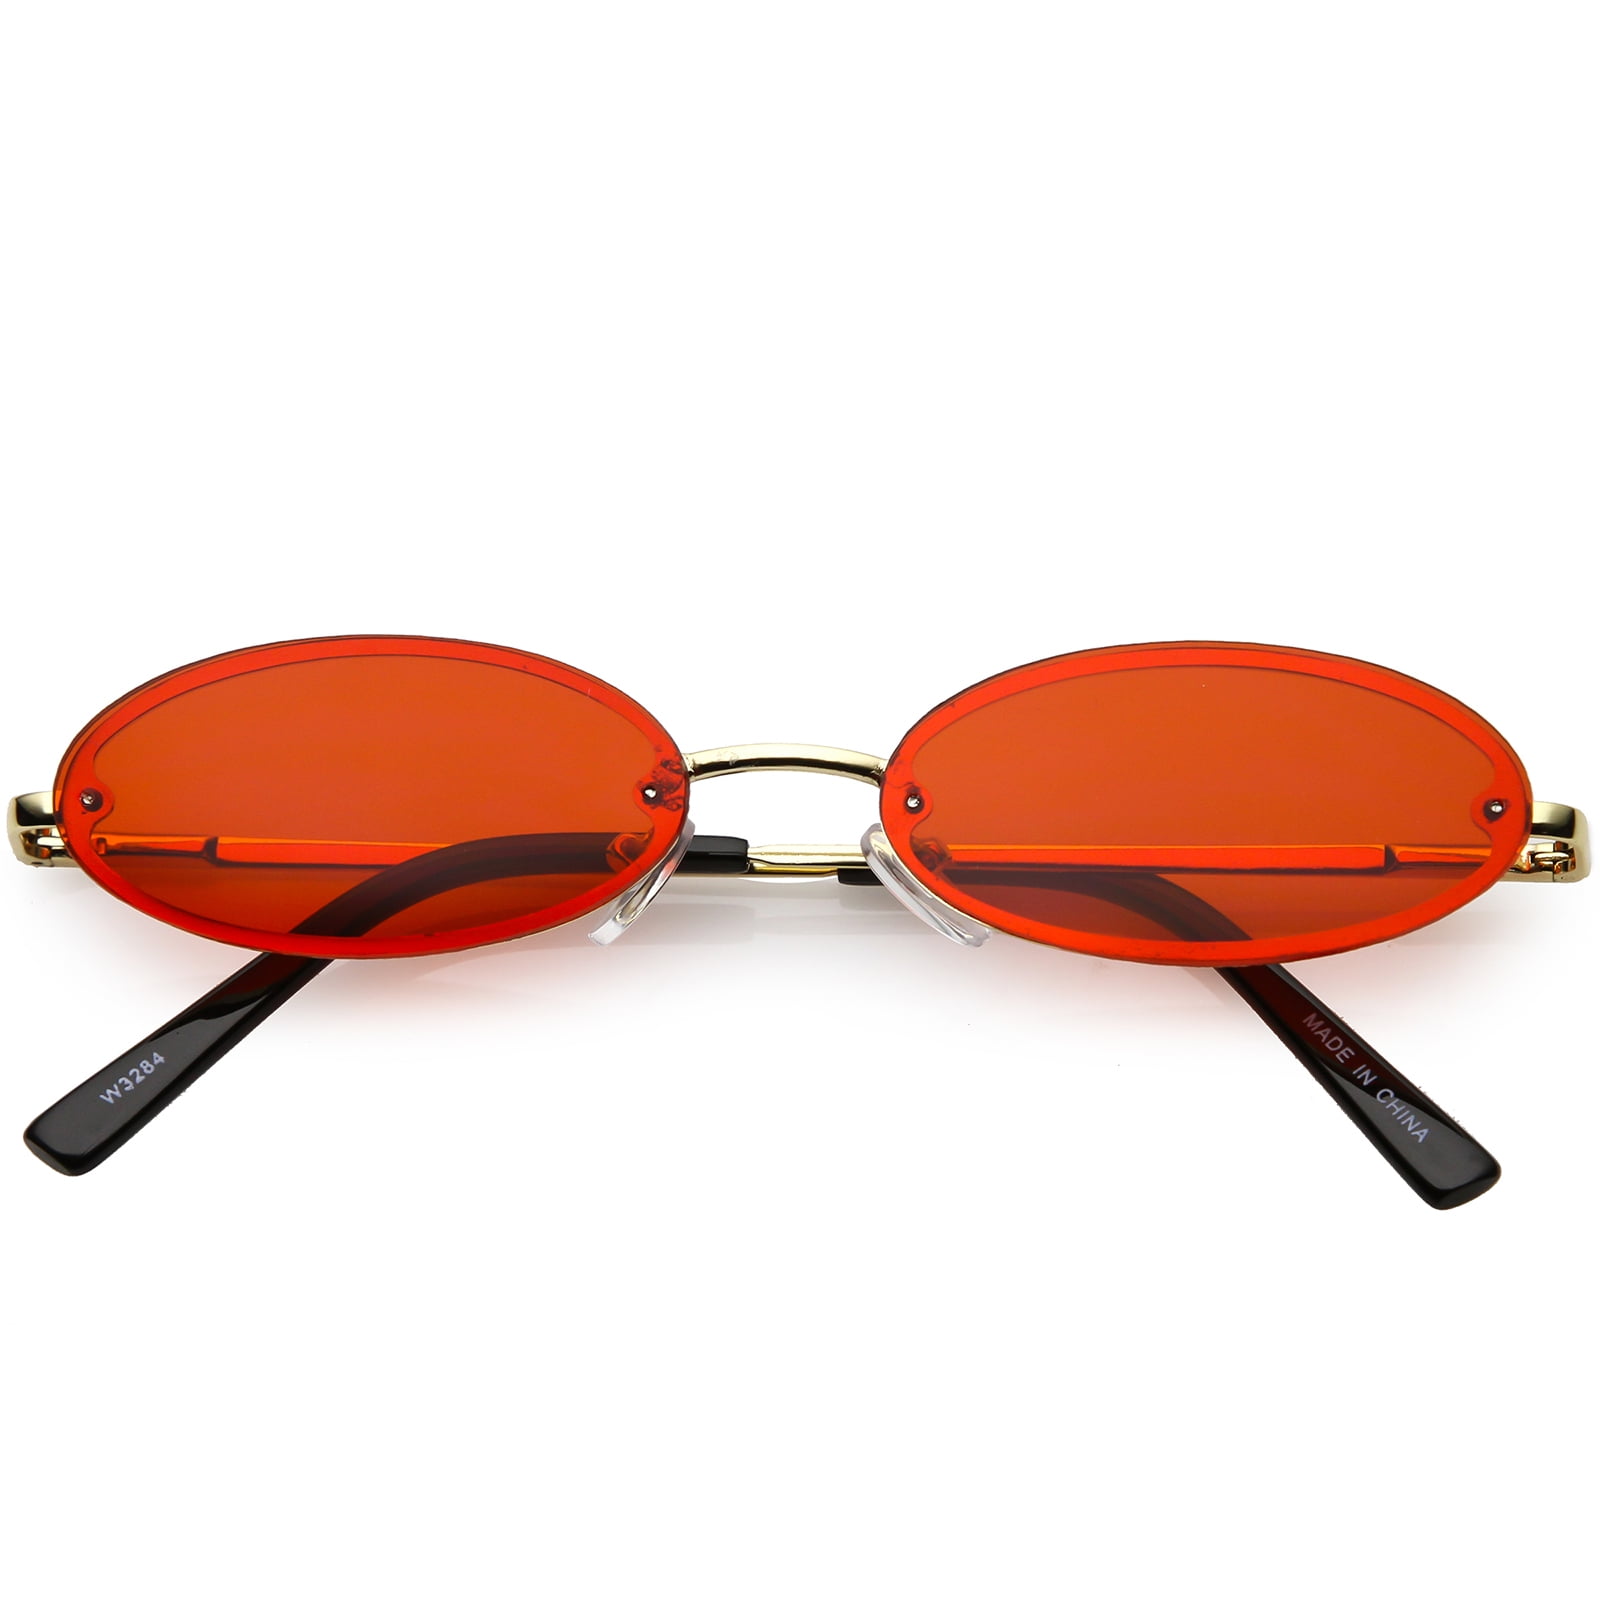 Sunglass La Retro Small Rimless Oval Sunglasses Slim Arms Color Tinted Lens 54mm Gold Red